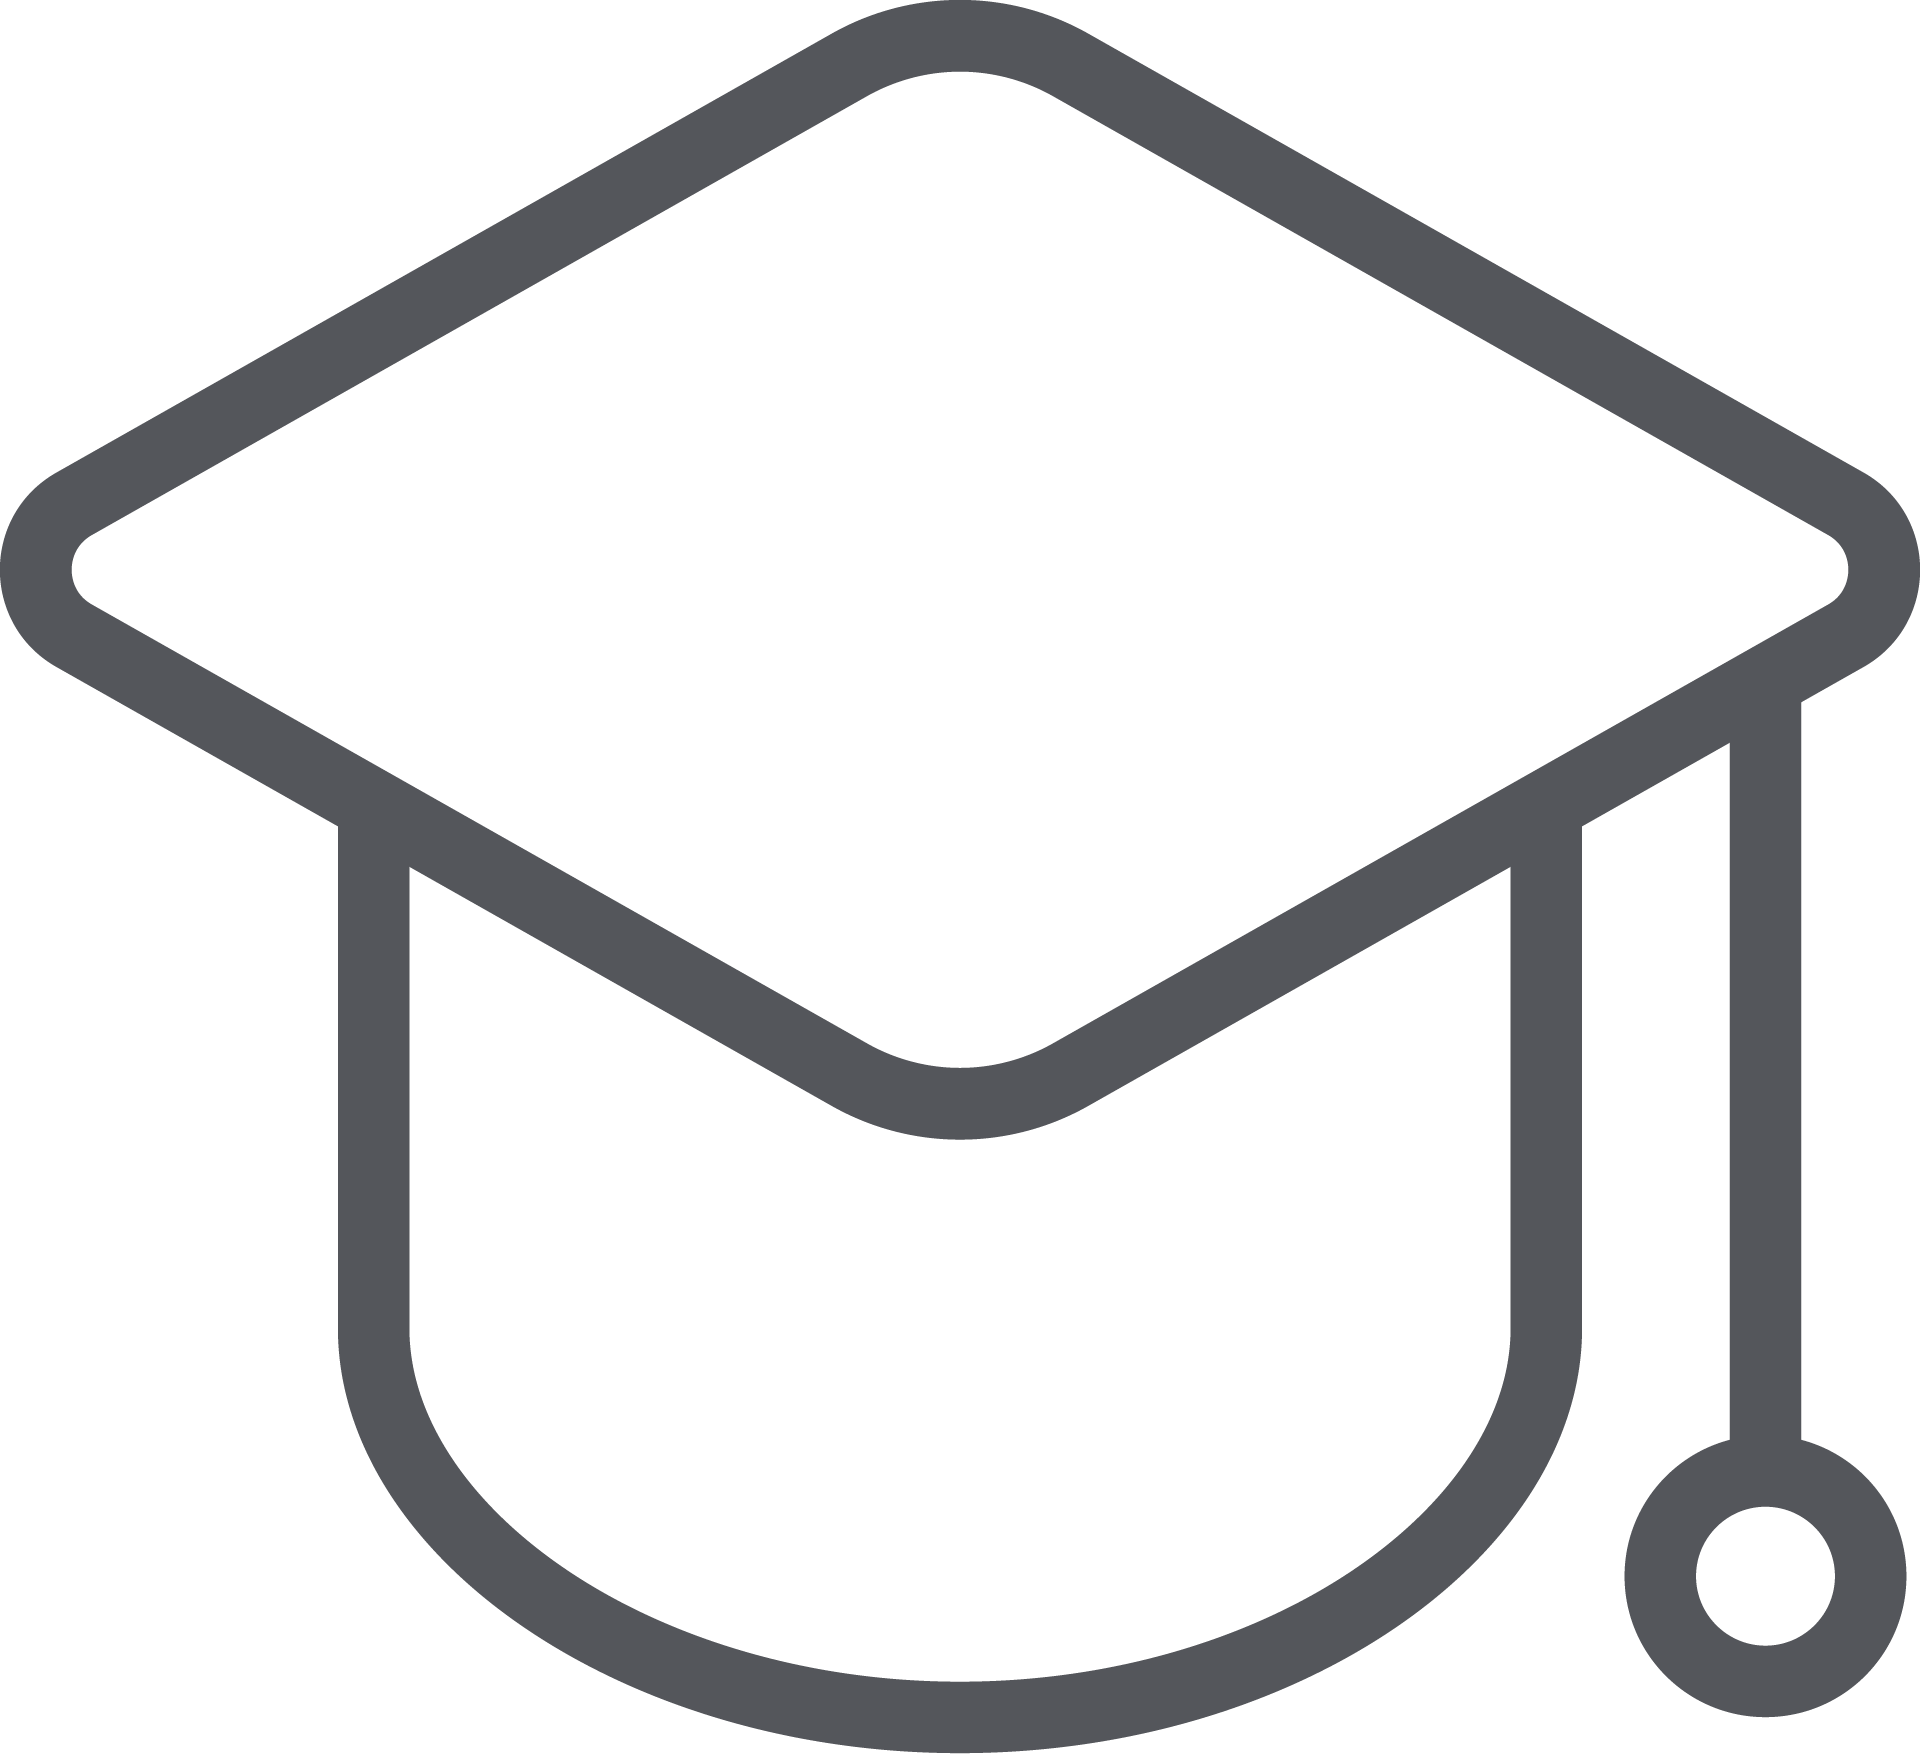 Graduation cap Icon